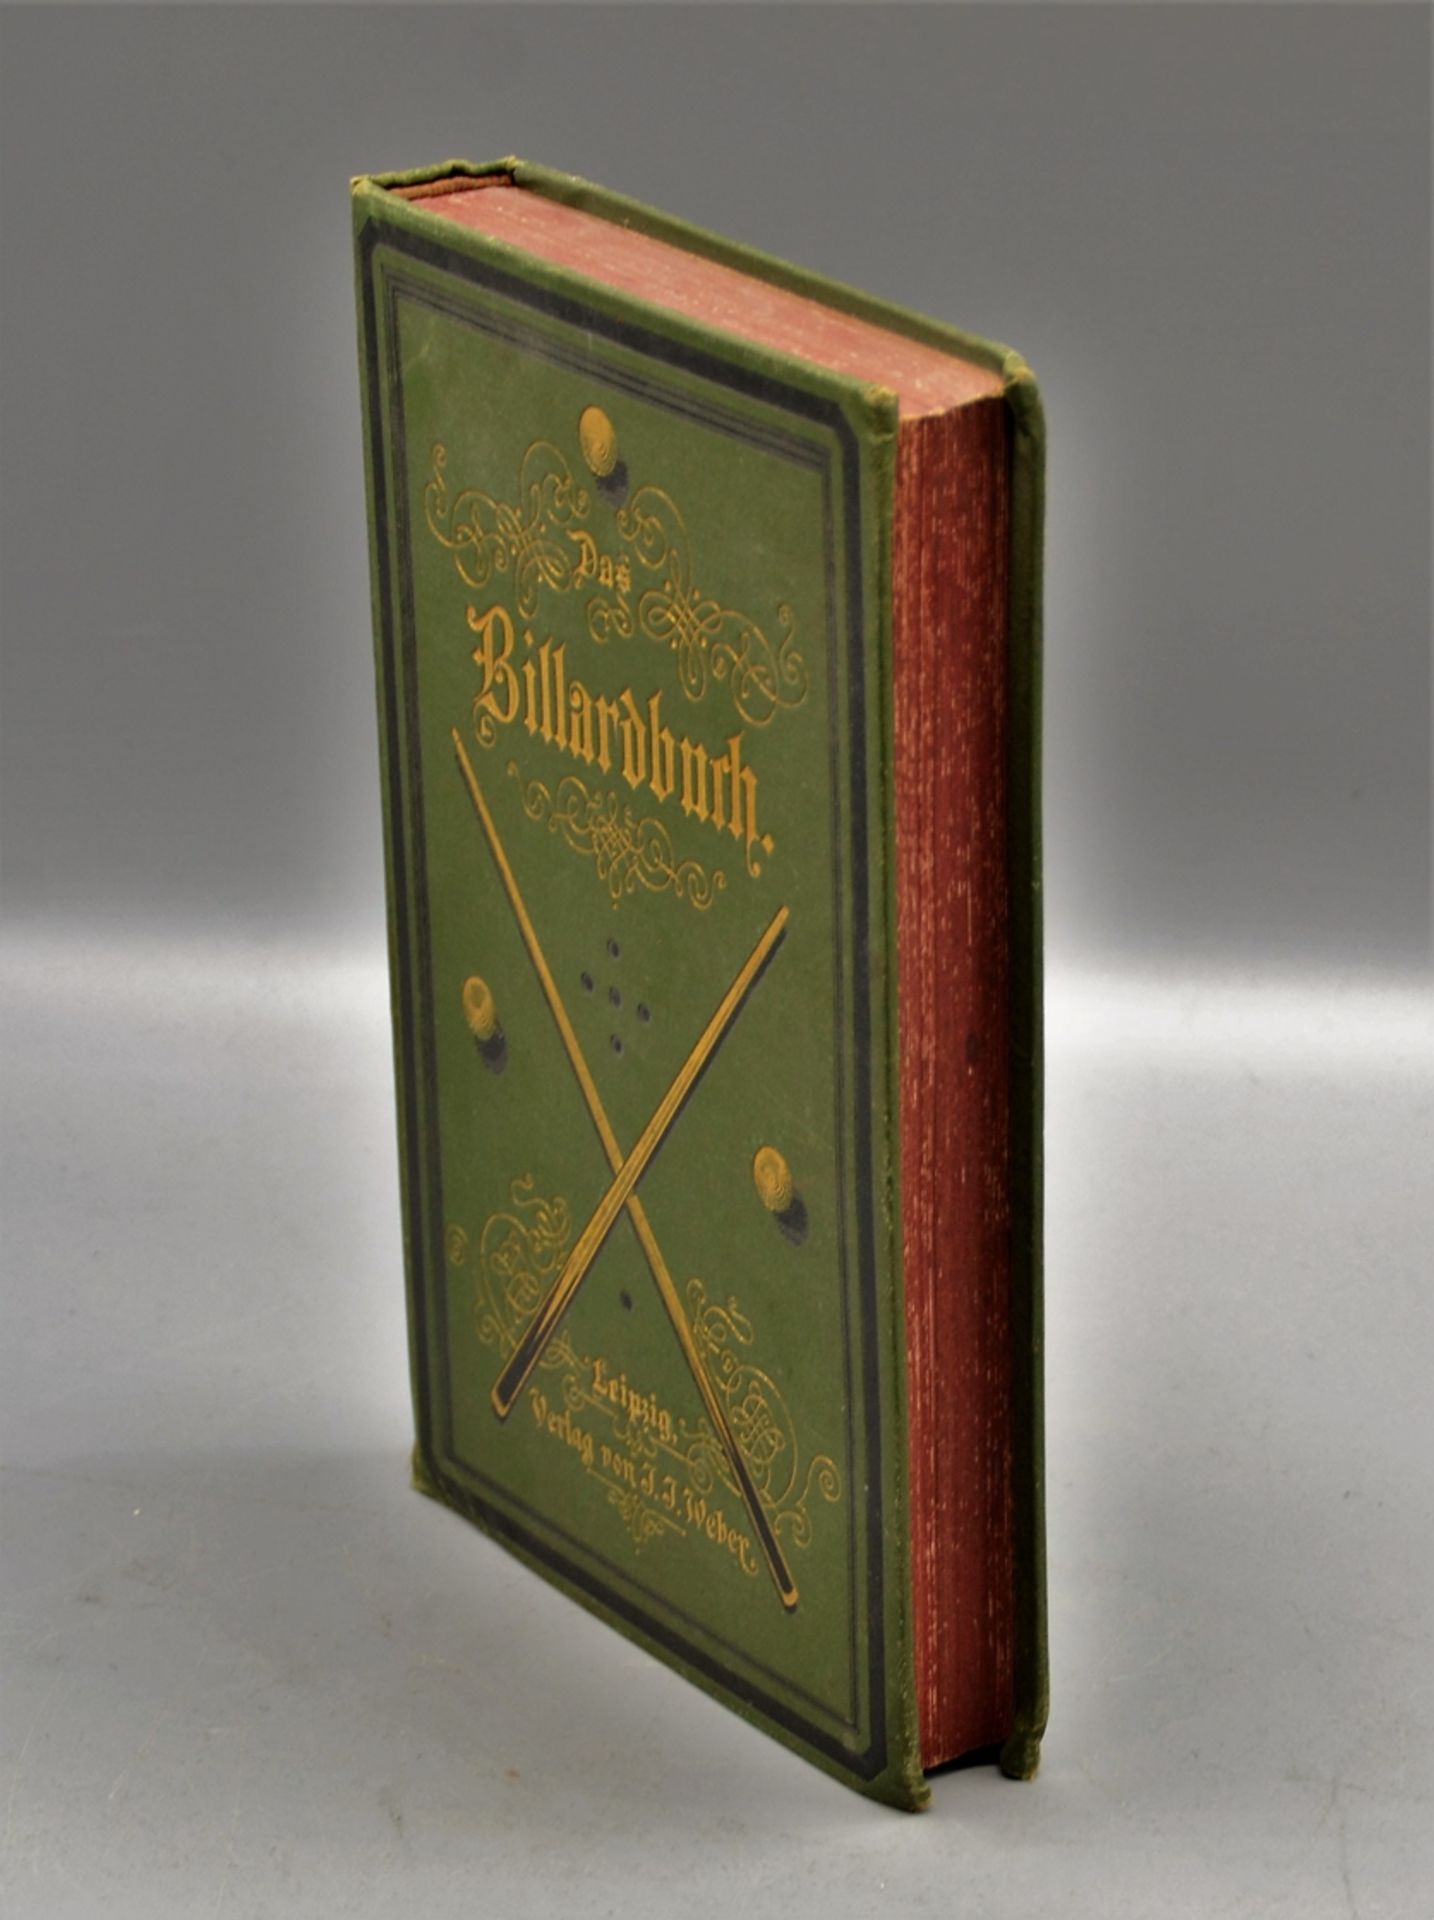 Das Billardbuch Cz. Bogumil Leipzig Verlag J. J. Weber 1876 - Bild 2 aus 2